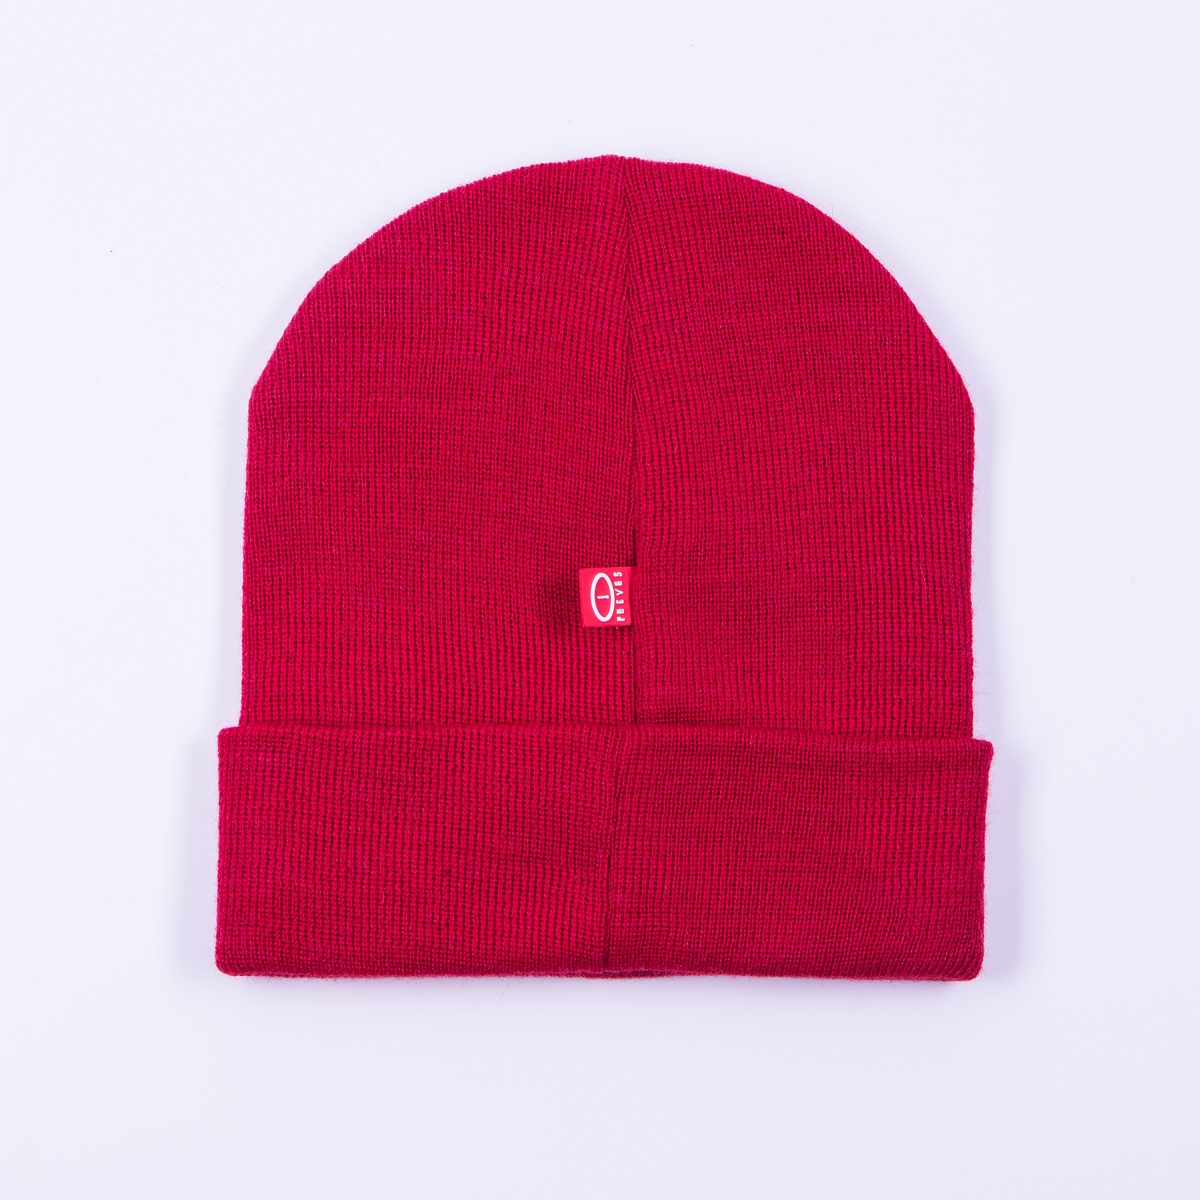 Вязанная шапка "Ред"